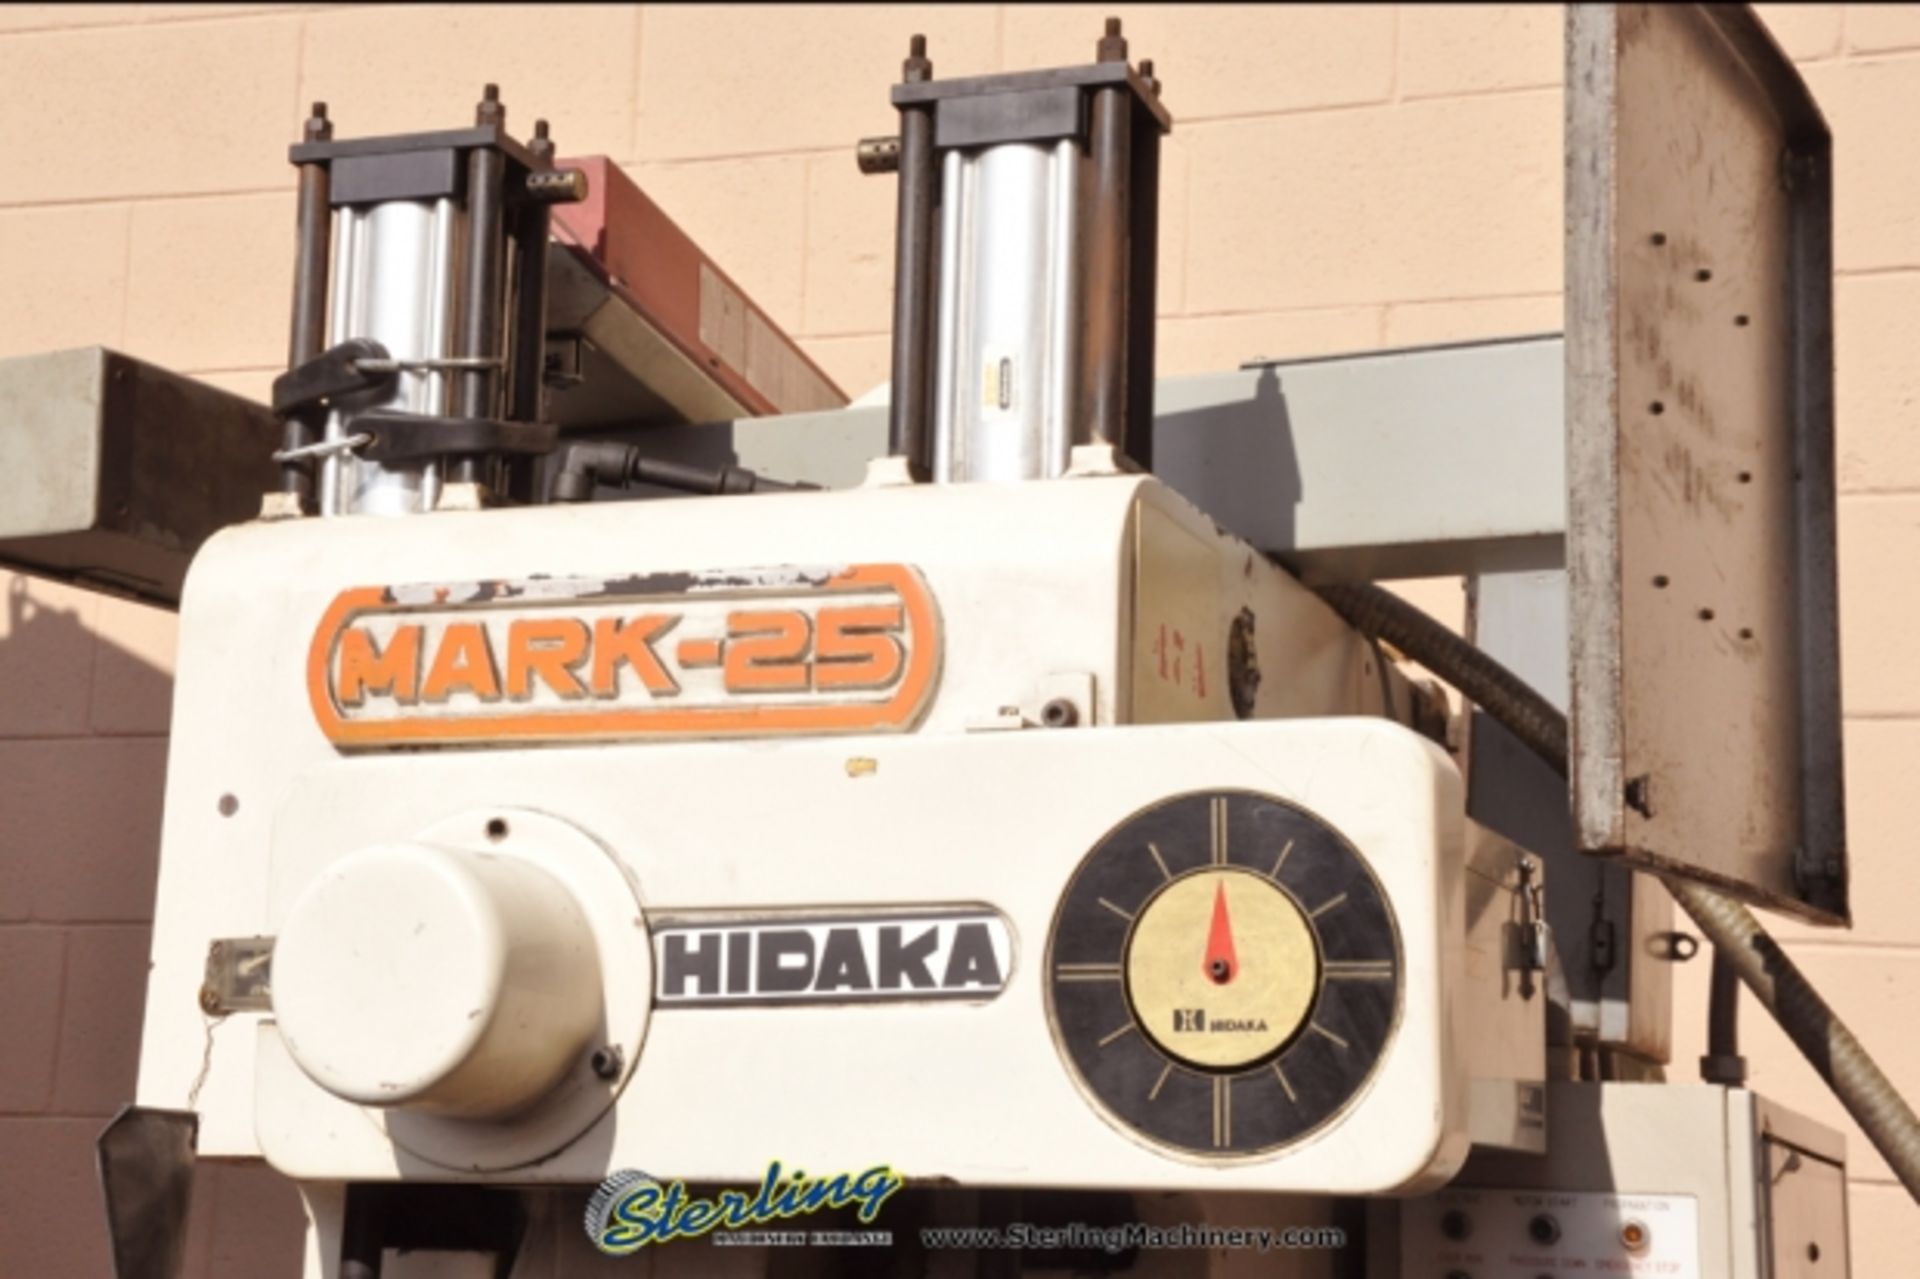 25 Ton x 2.9" Used Hidaka OBS Punch Press, Mdl. Mark 25, - Image 10 of 12